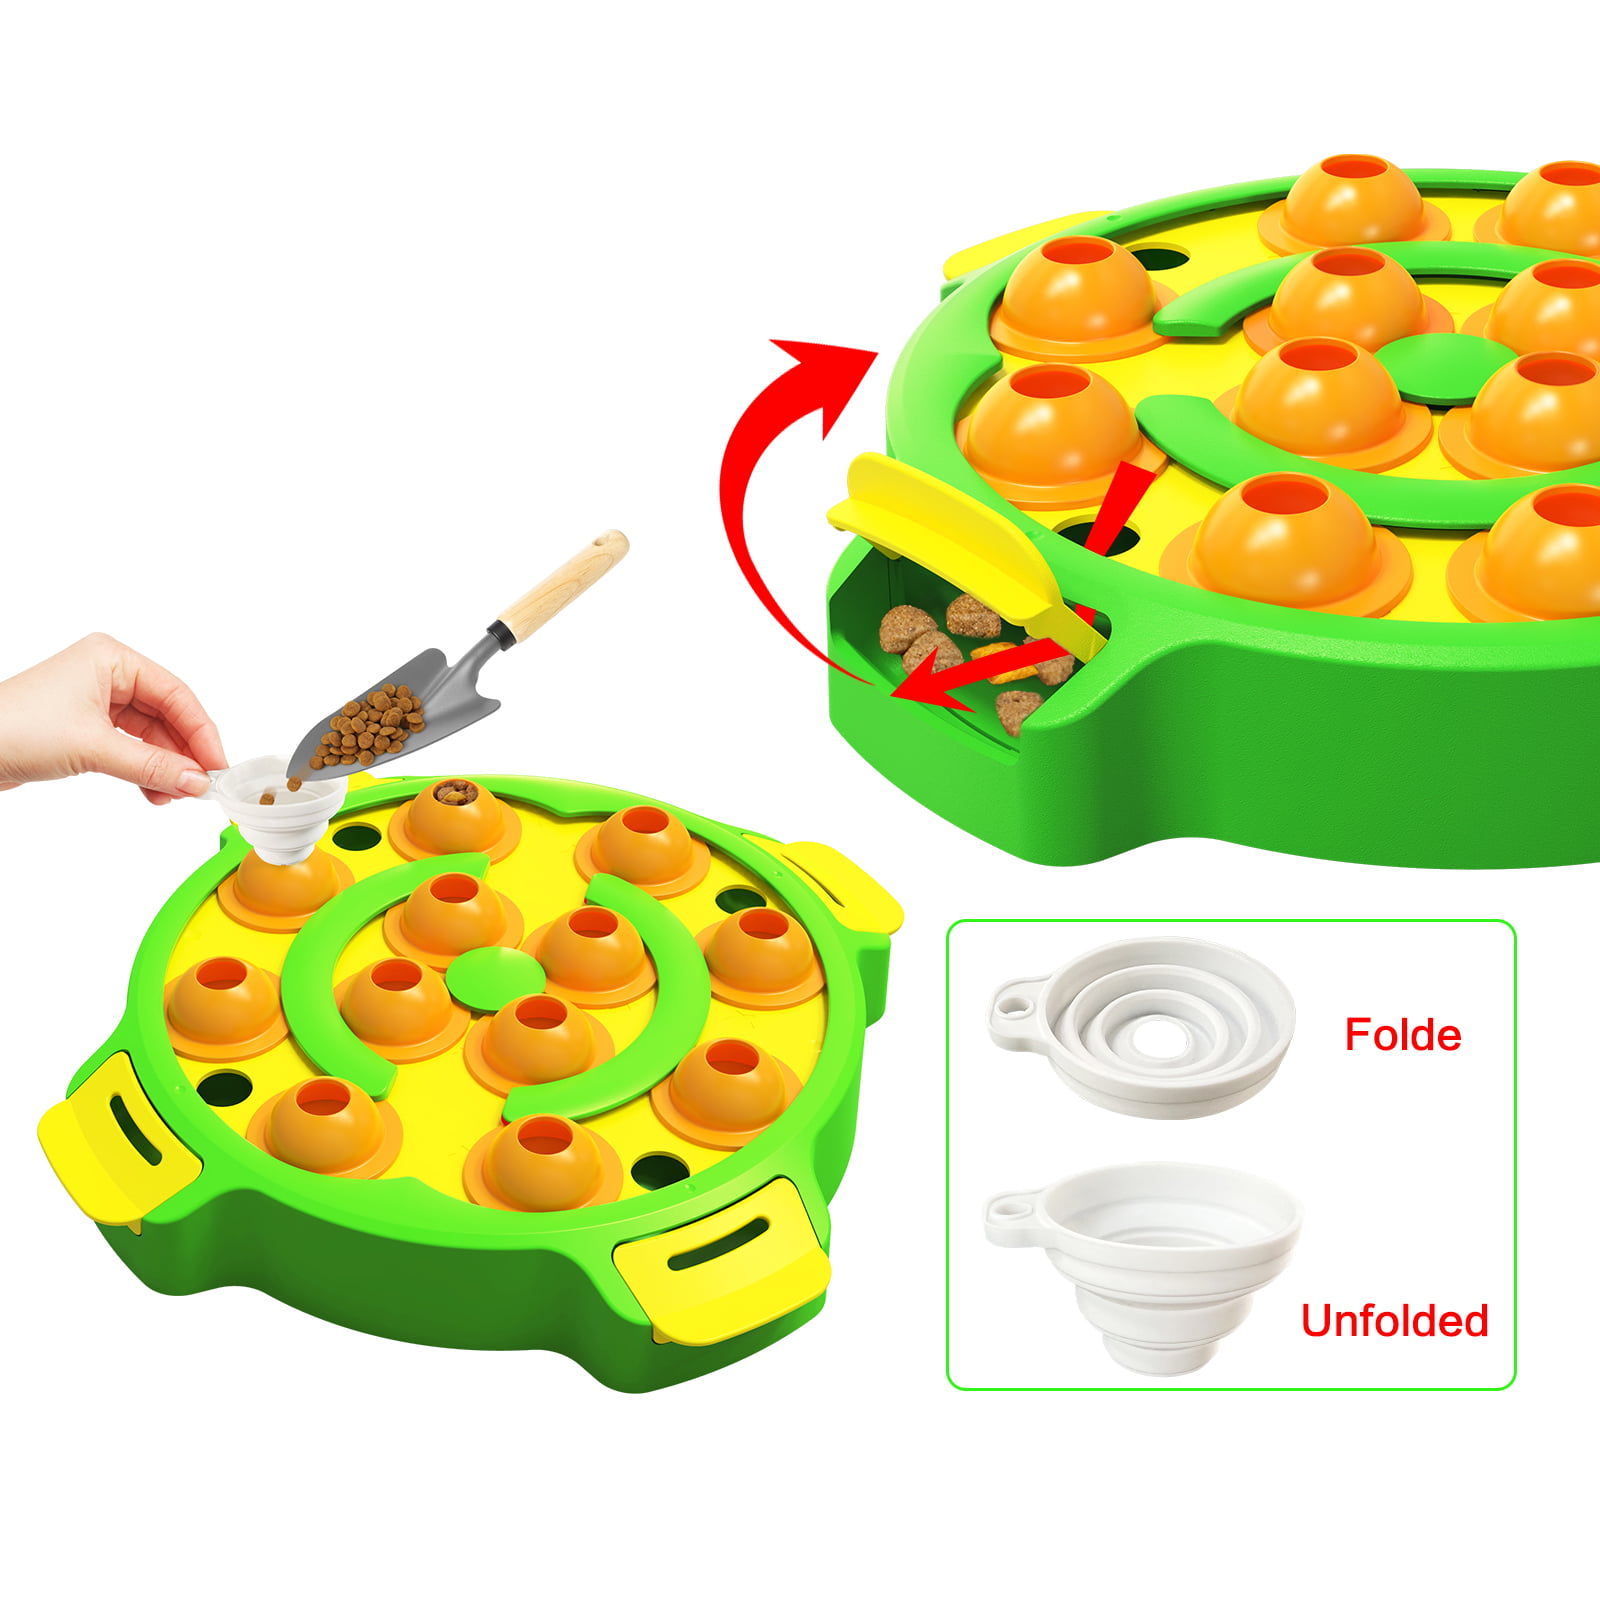 Loobani Dog Food Puzzle Toy Interactive Treat Dispenser IQ Training Slow  Feeder